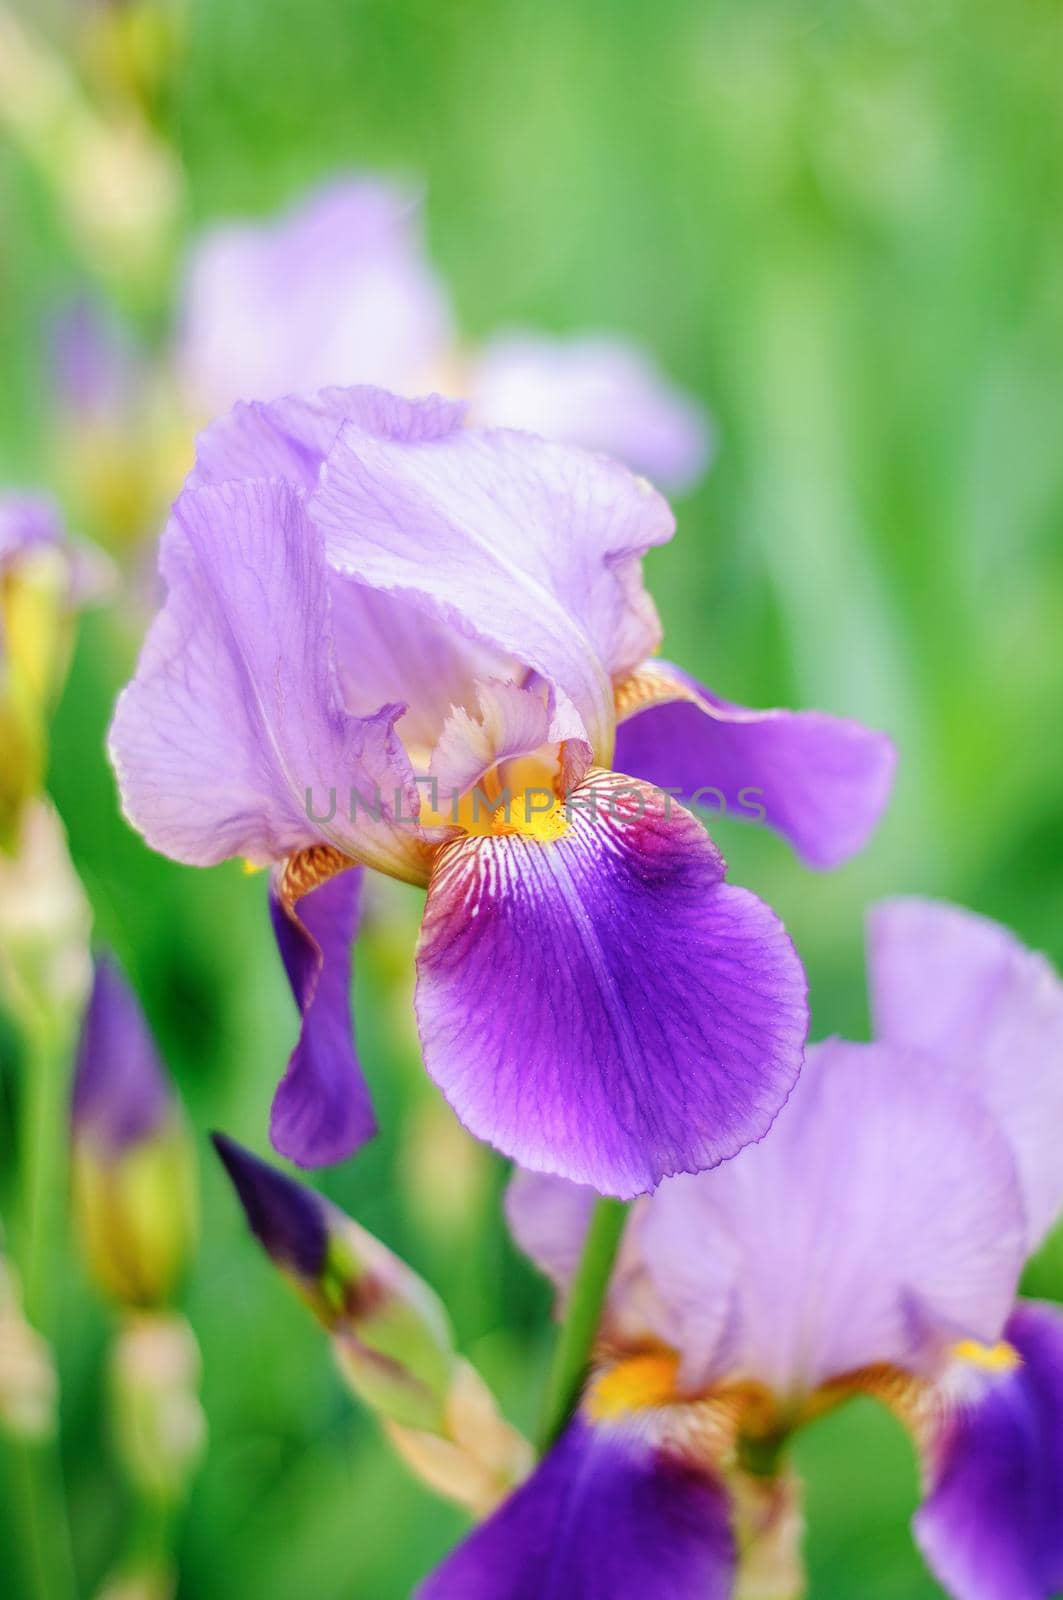 Iris flower macro photo on a green background  by ozornina